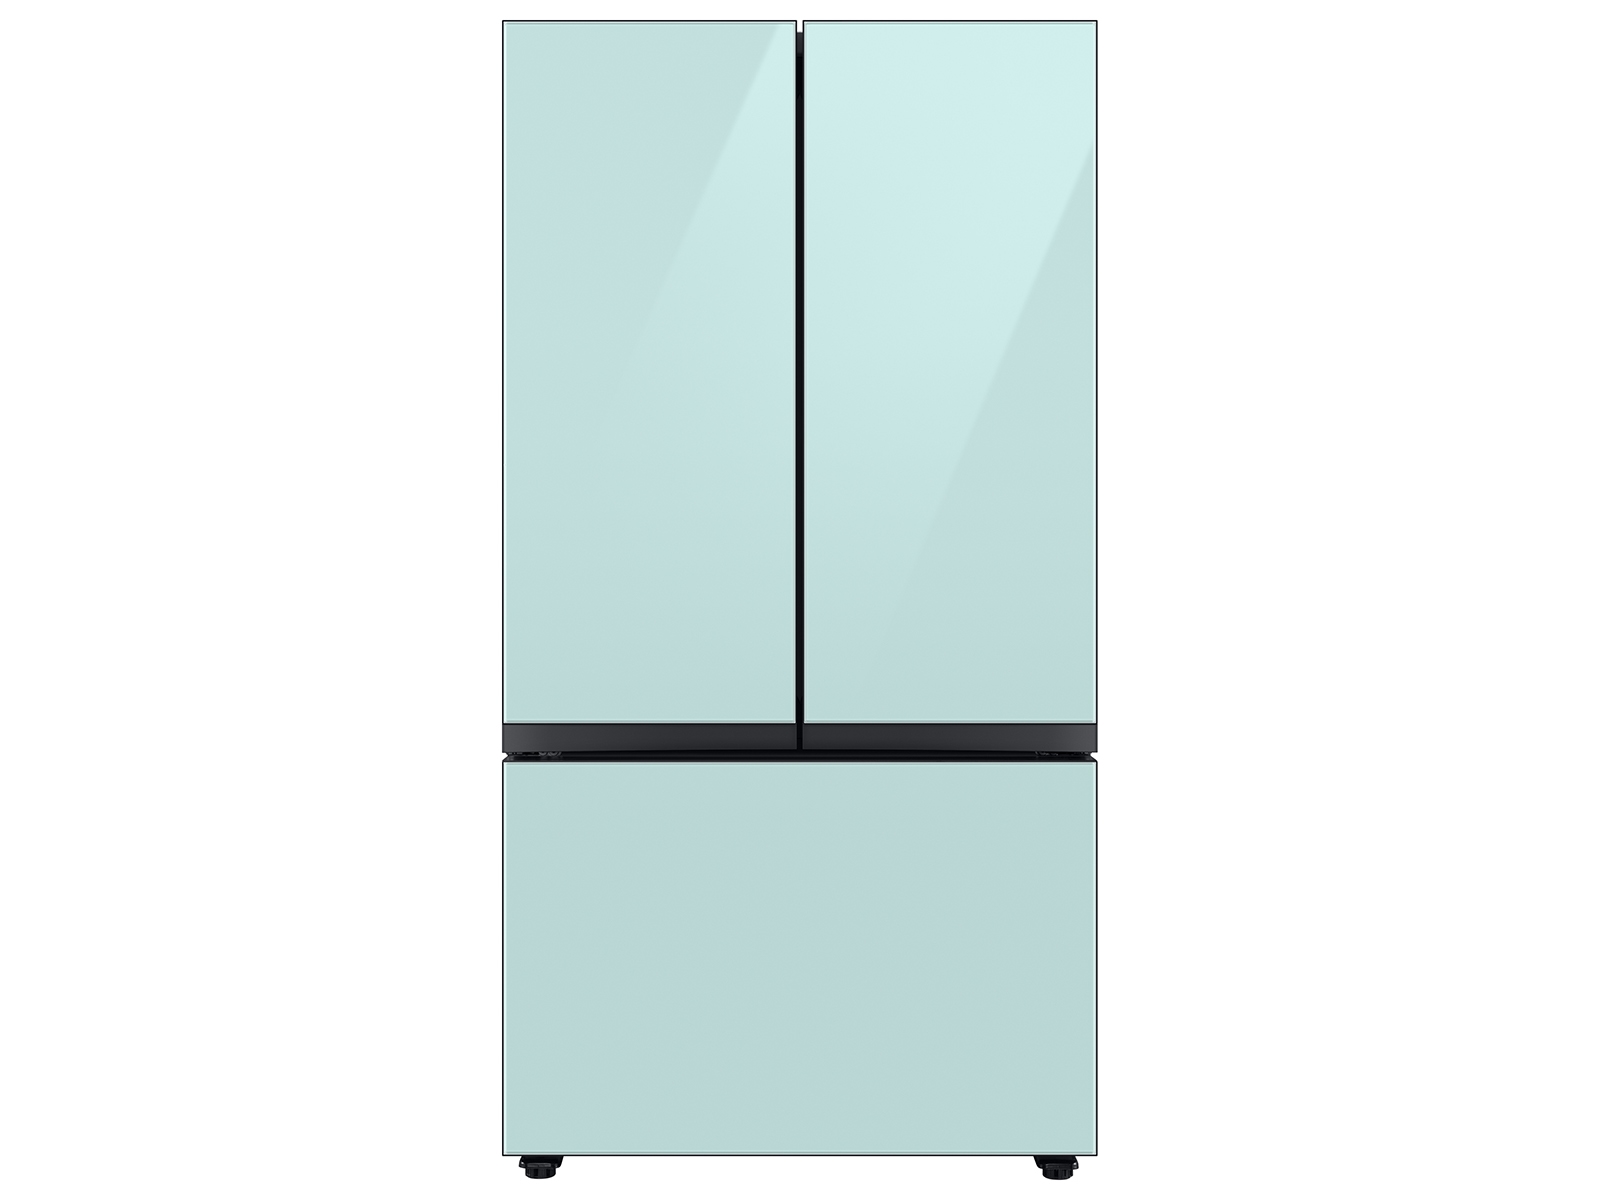 Bespoke 3-Door French Door Refrigerator (24 cu. ft.) with Beverage Center™ in Morning Blue Glass